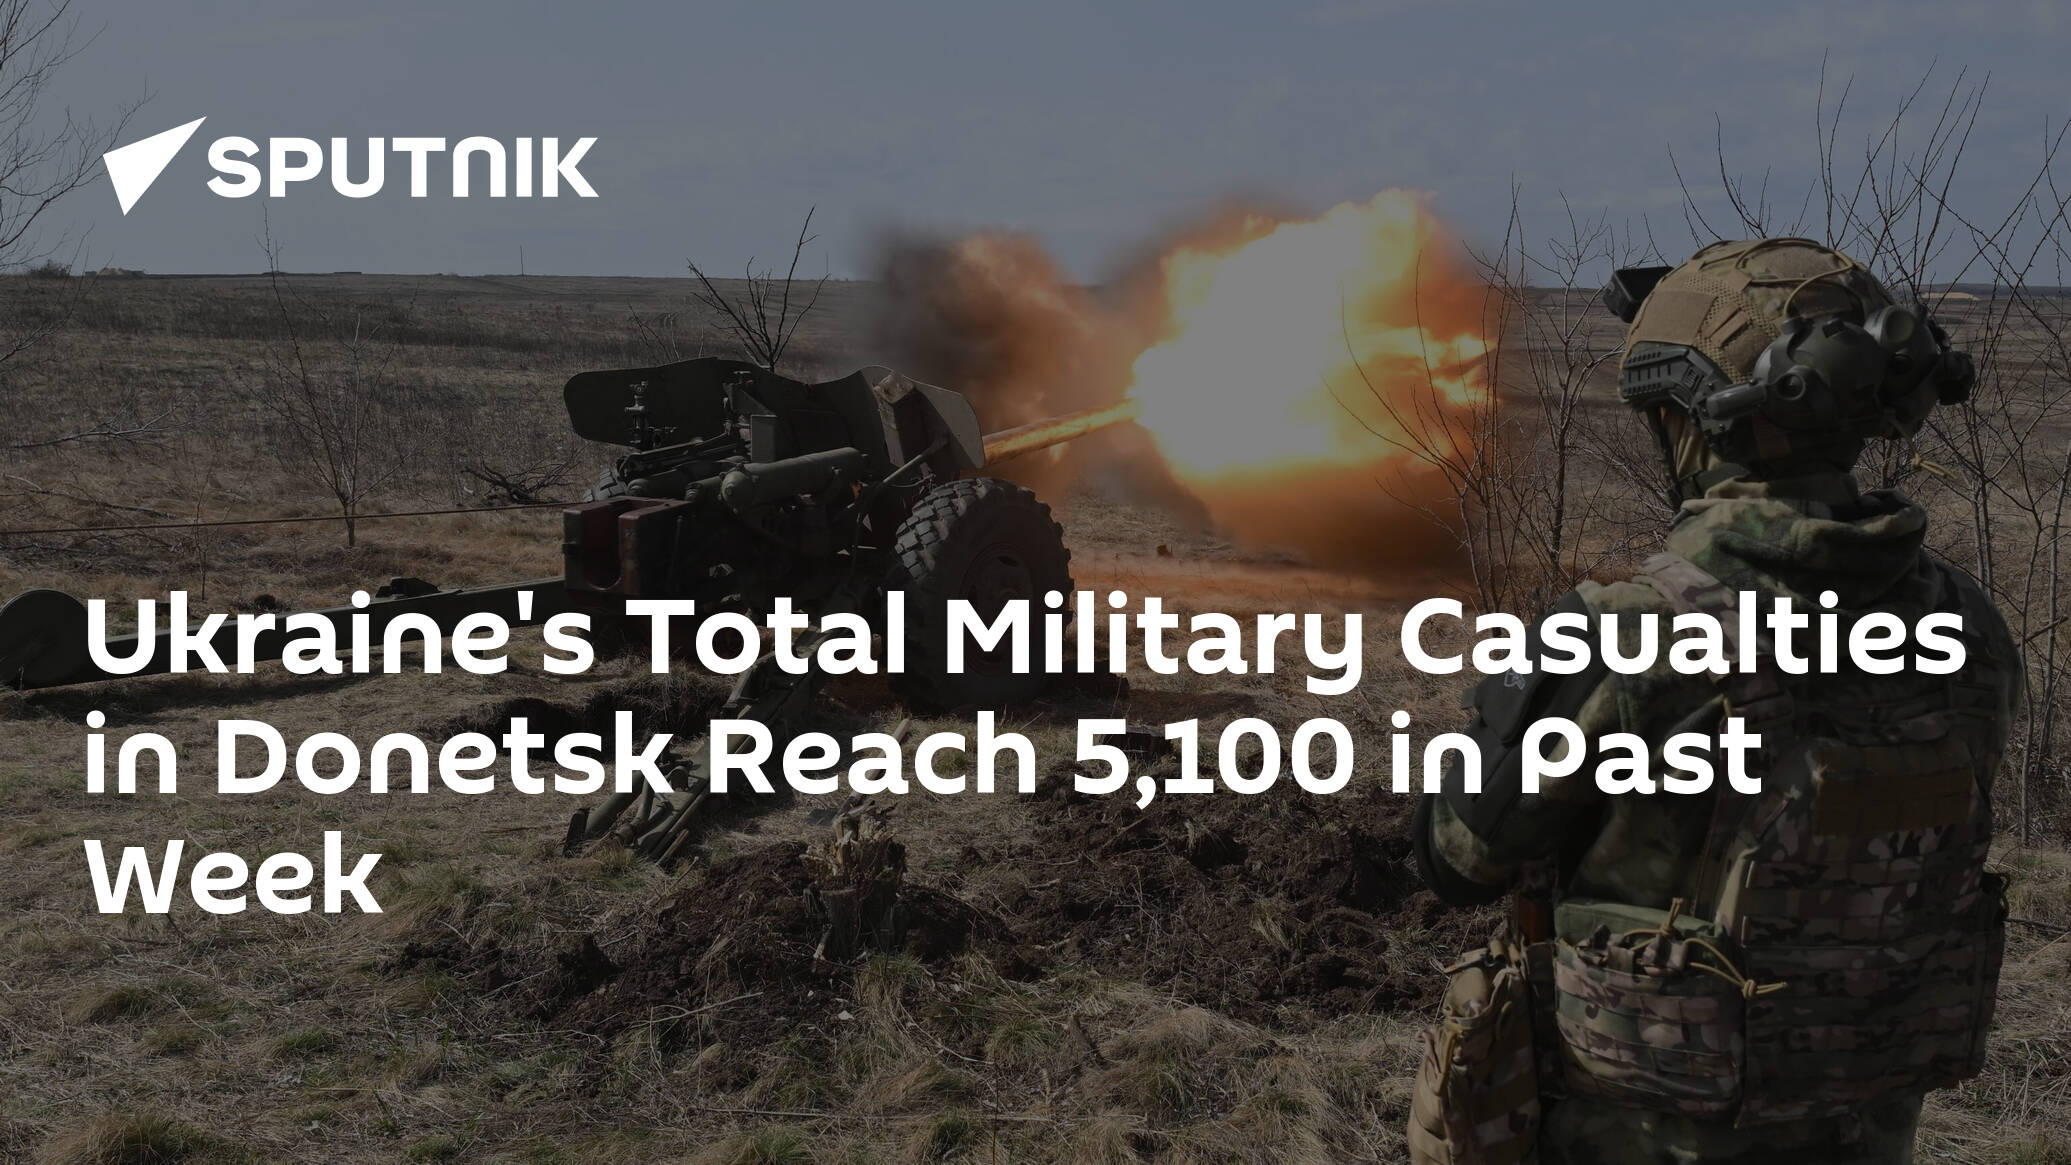 Ukraine's Total Military Casualties in Donetsk Reach 5,100 in Past Week